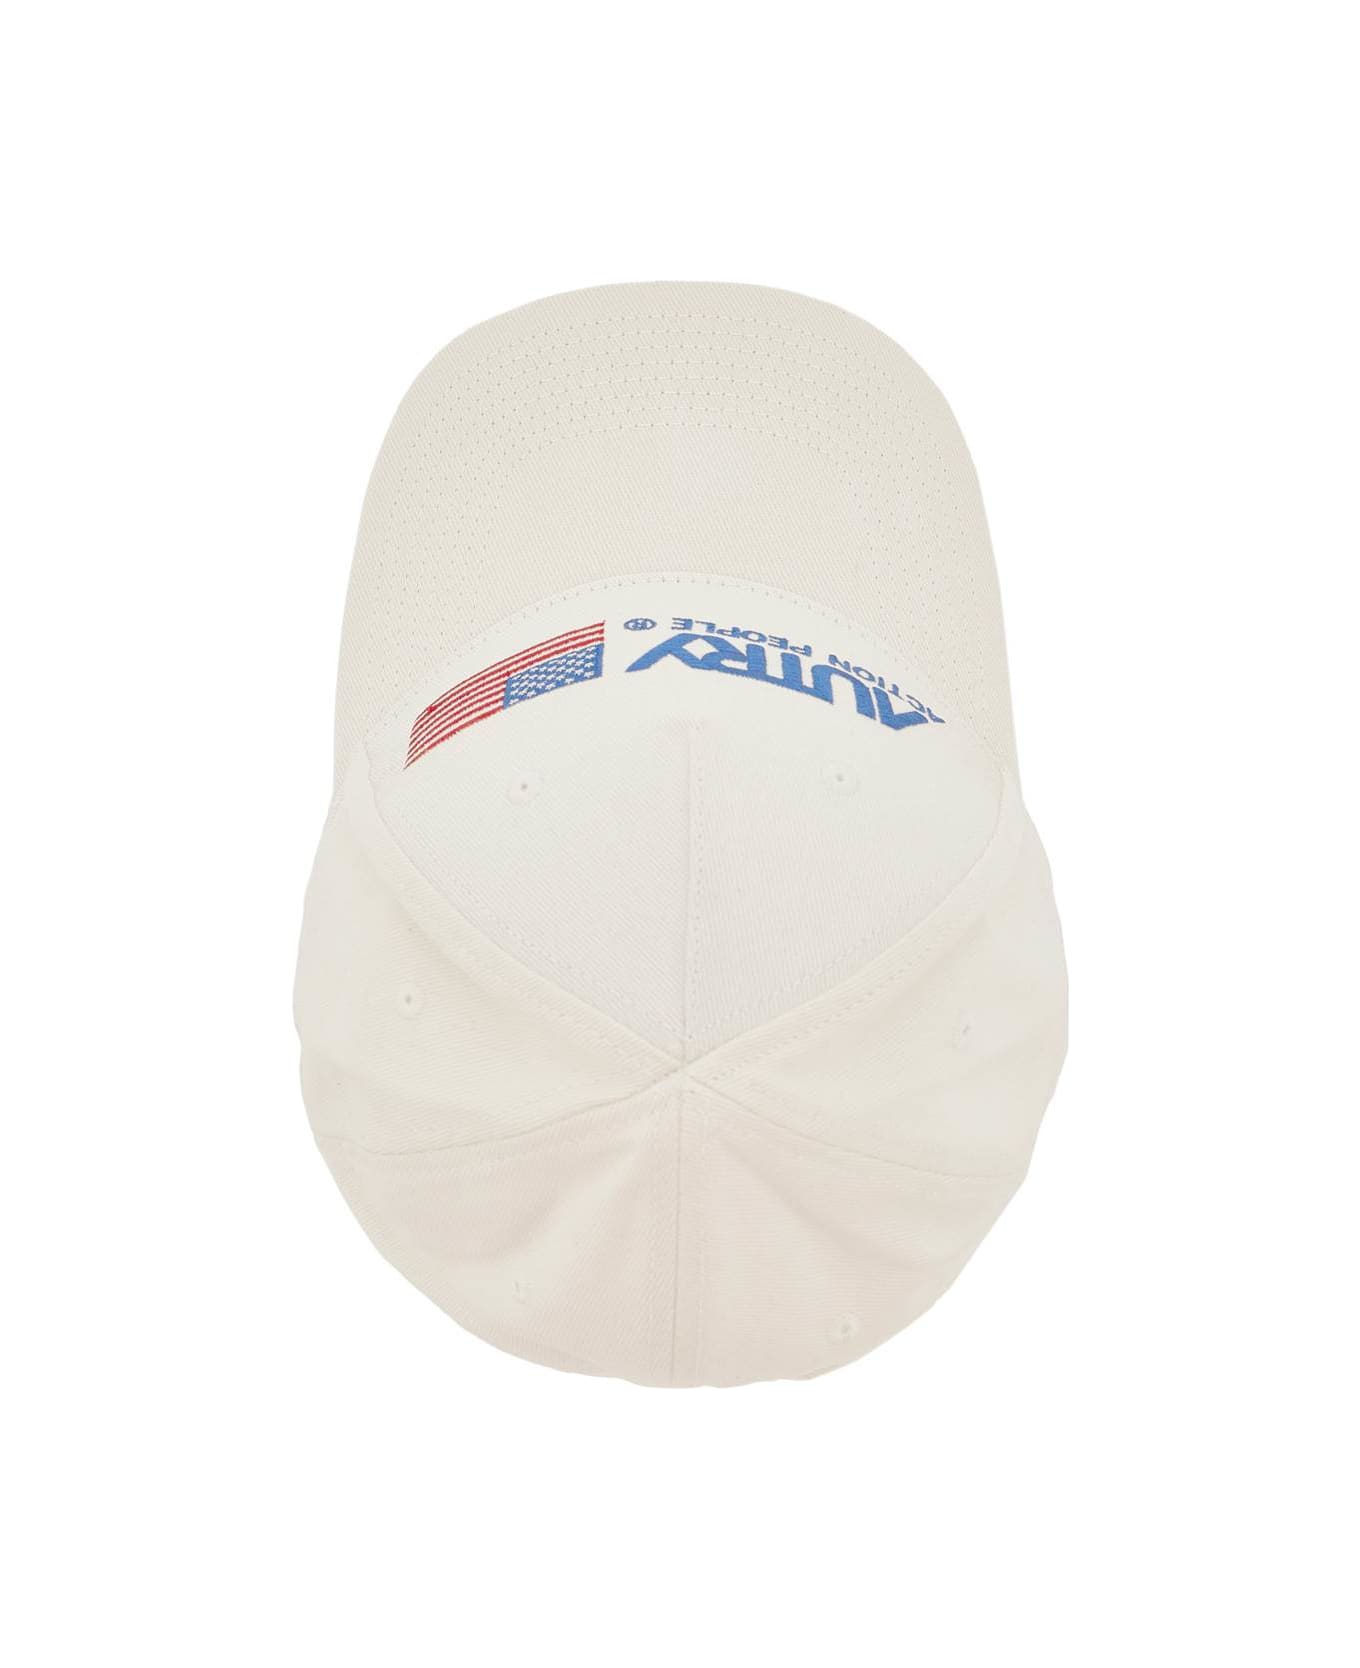 Autry 'iconic Logo' Baseball Cap - WHITE (White)